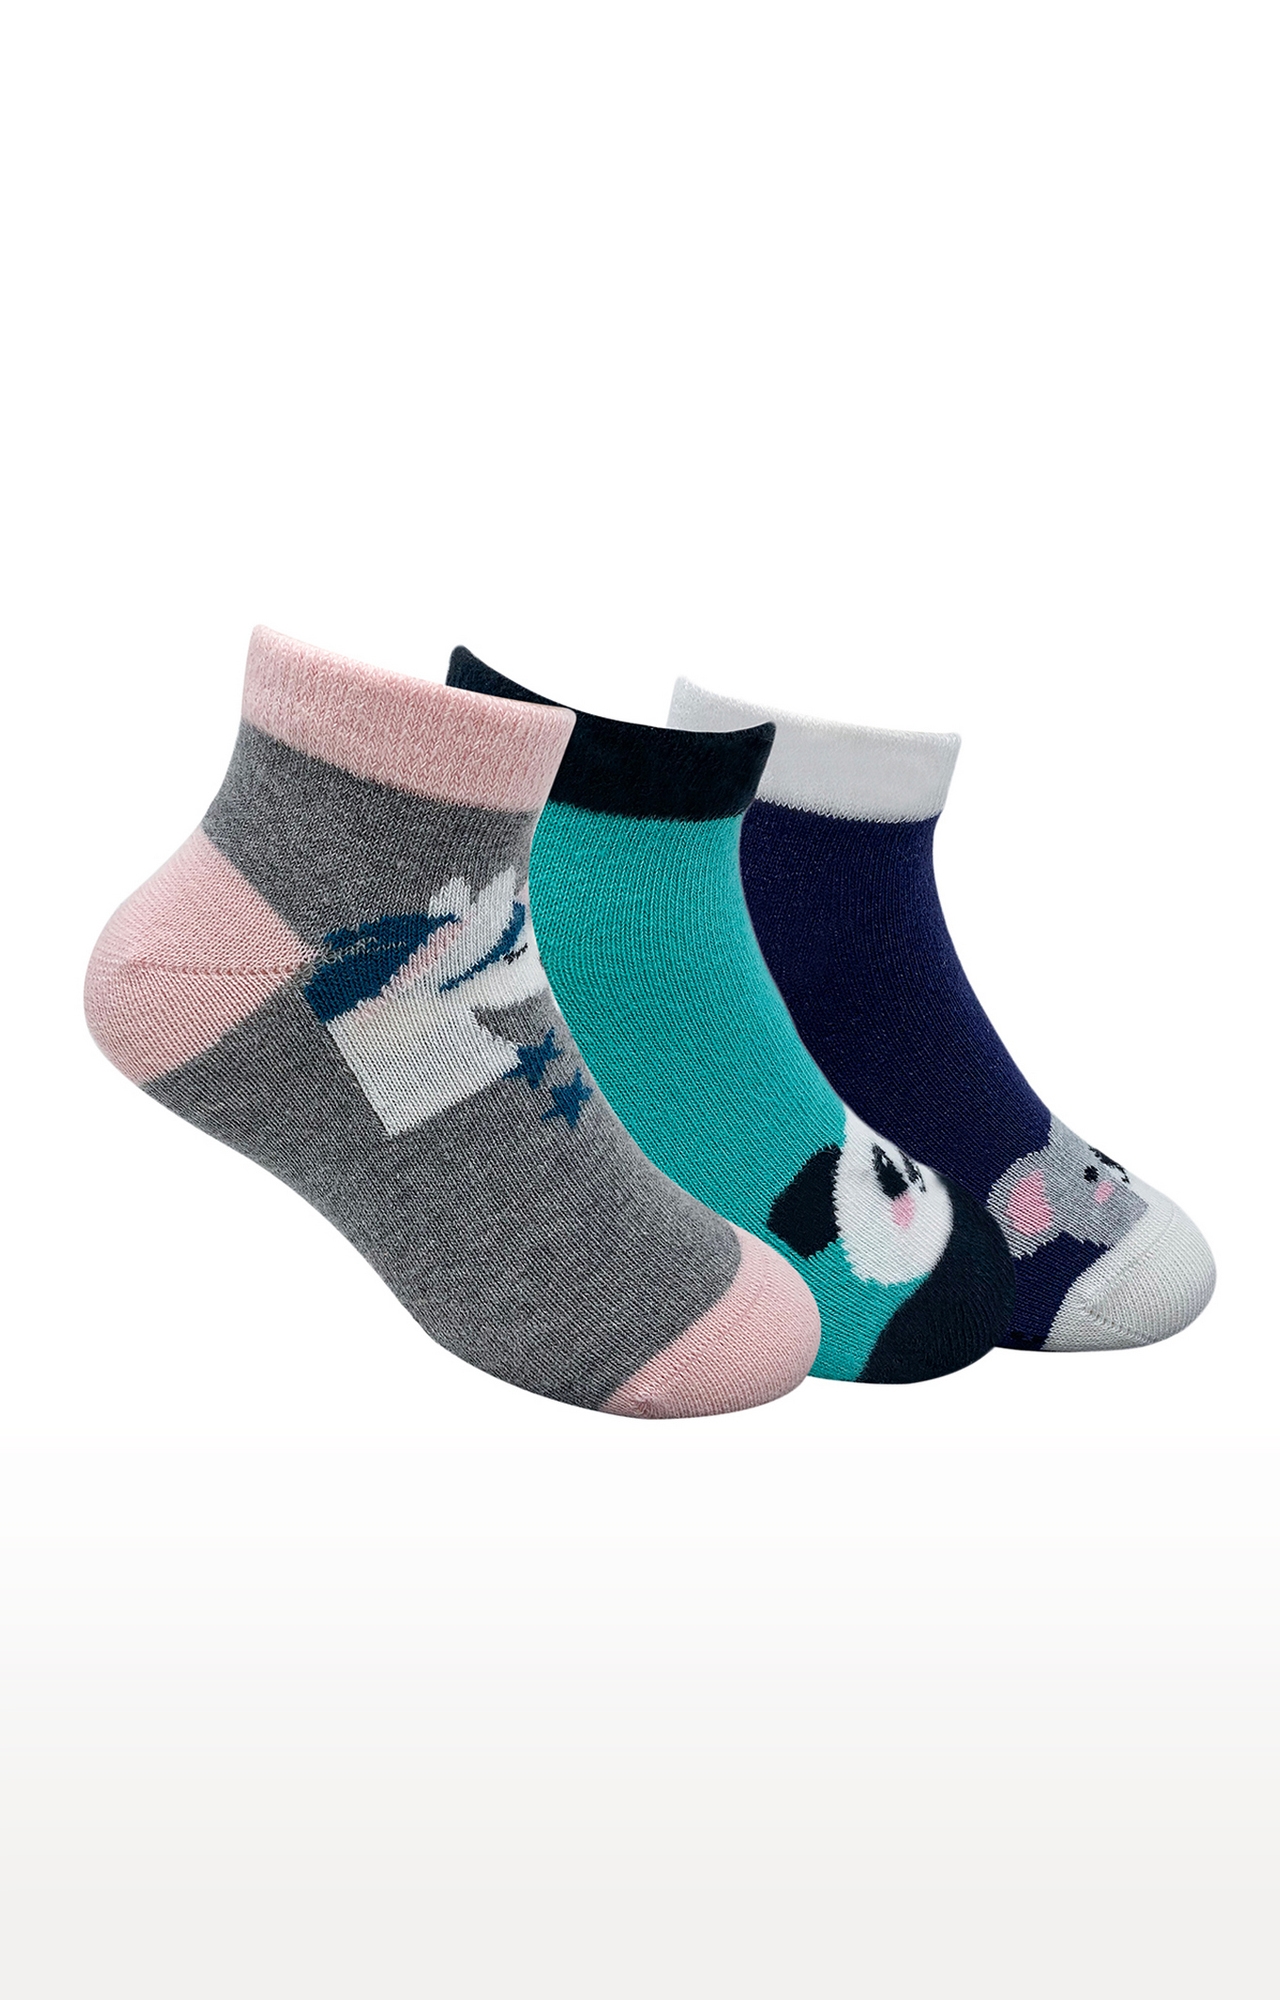 Mint & Oak Oh So Cool Cotton Multi Ankle Length Socks for Kids - Pack of 3